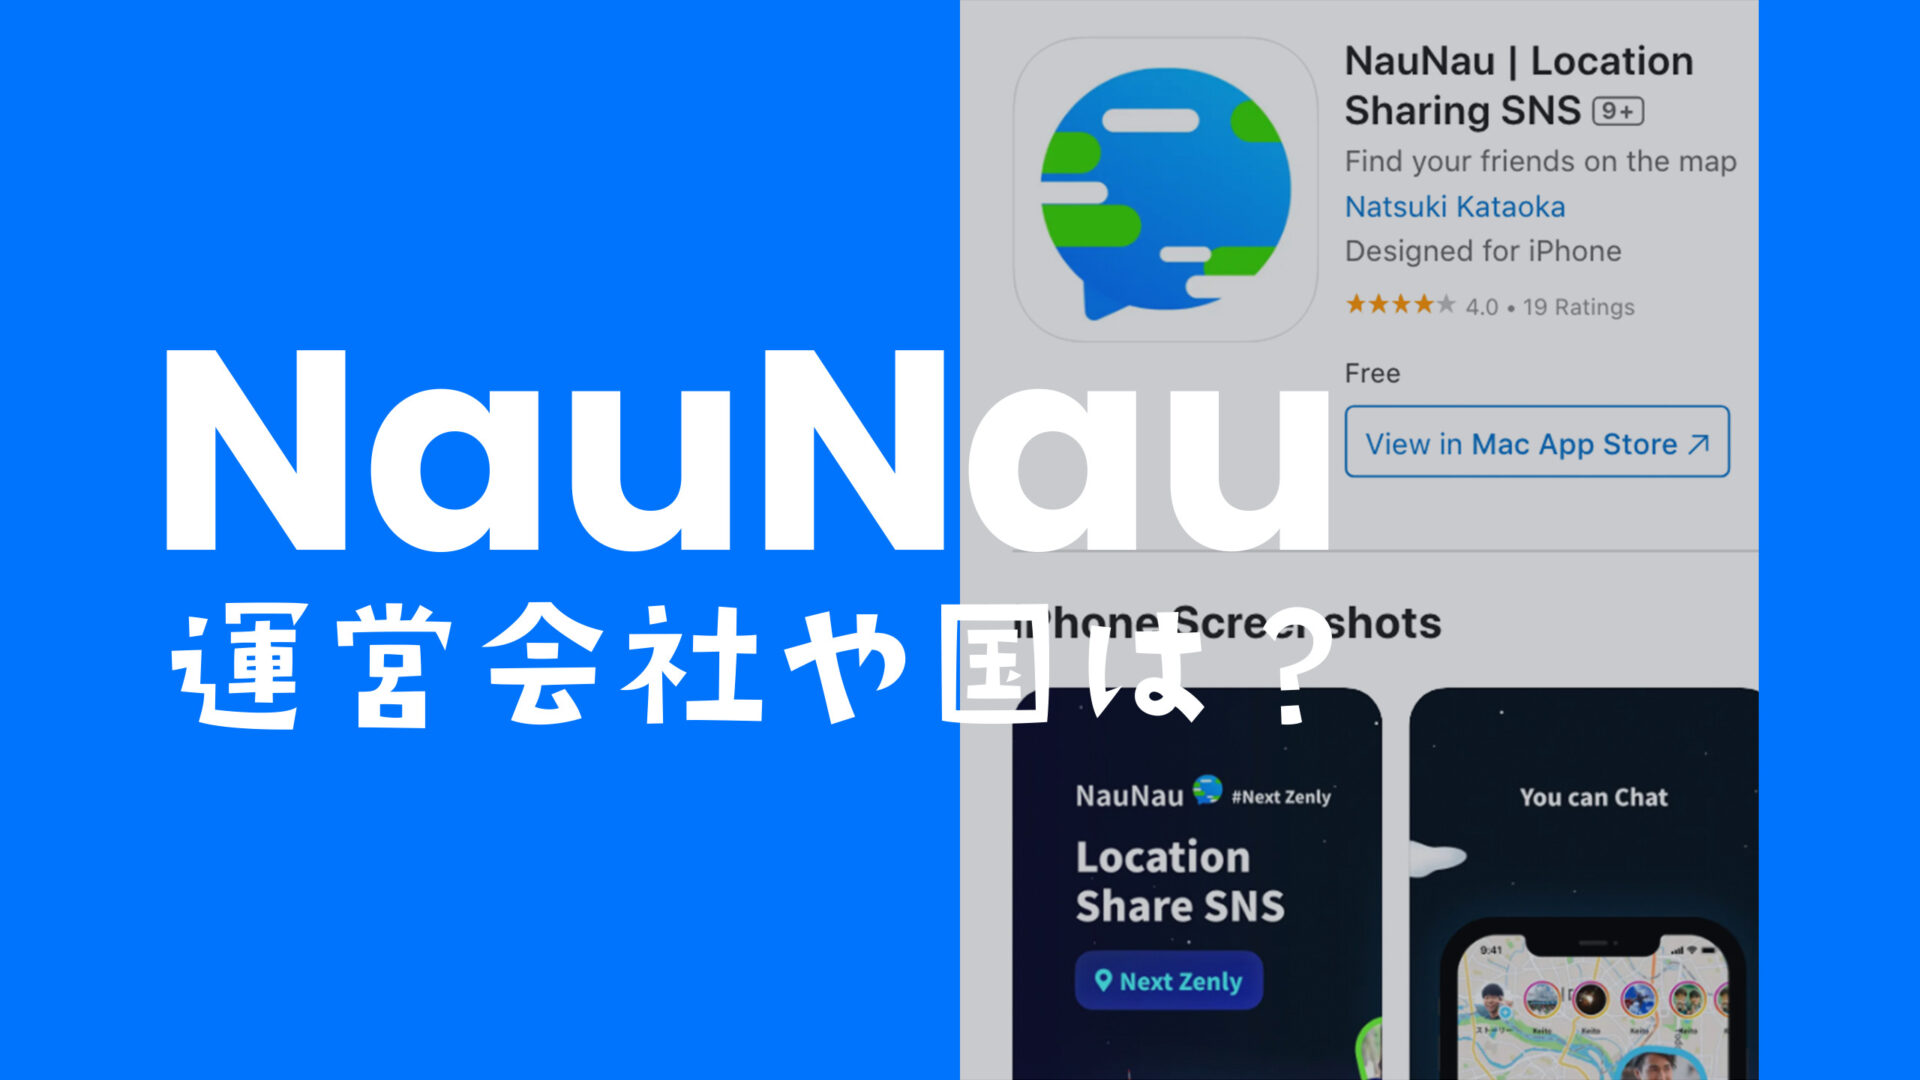 NauNauの運営会社は？どこの国の企業なのか解説。のサムネイル画像